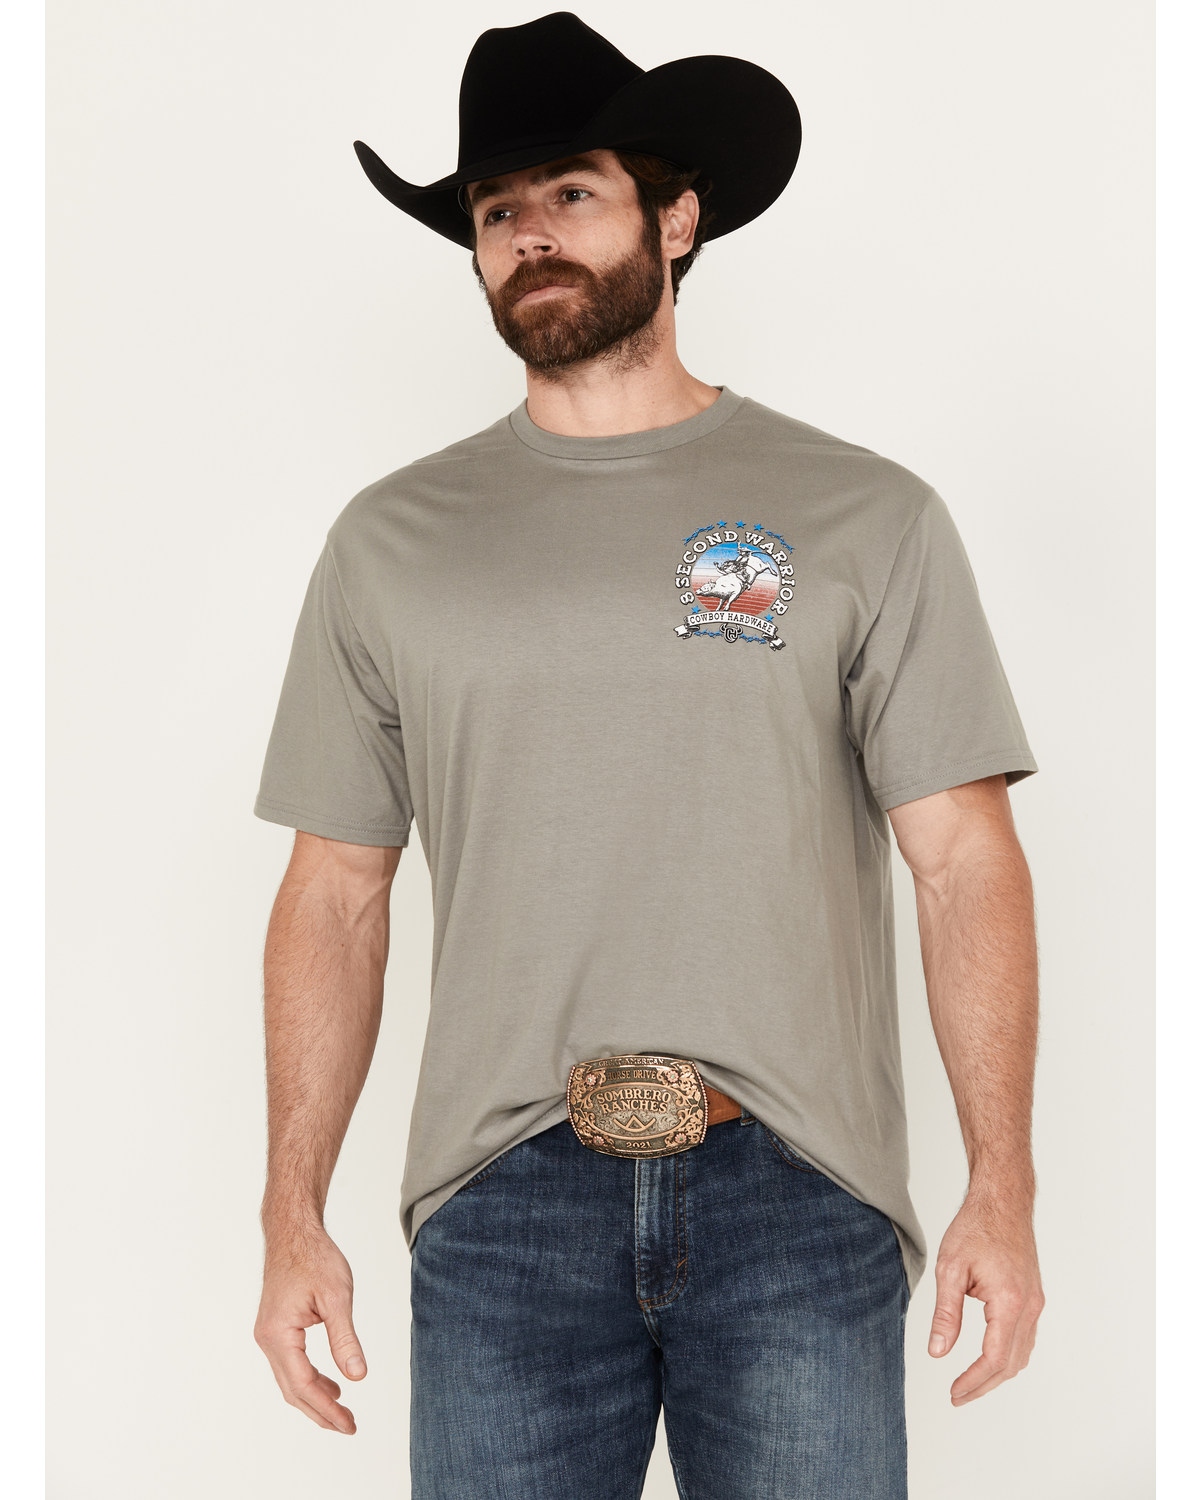 Cowboy Hardware Men's 8 Second Warrior Bull Rider Short Sleeve Graphic T-Shirt